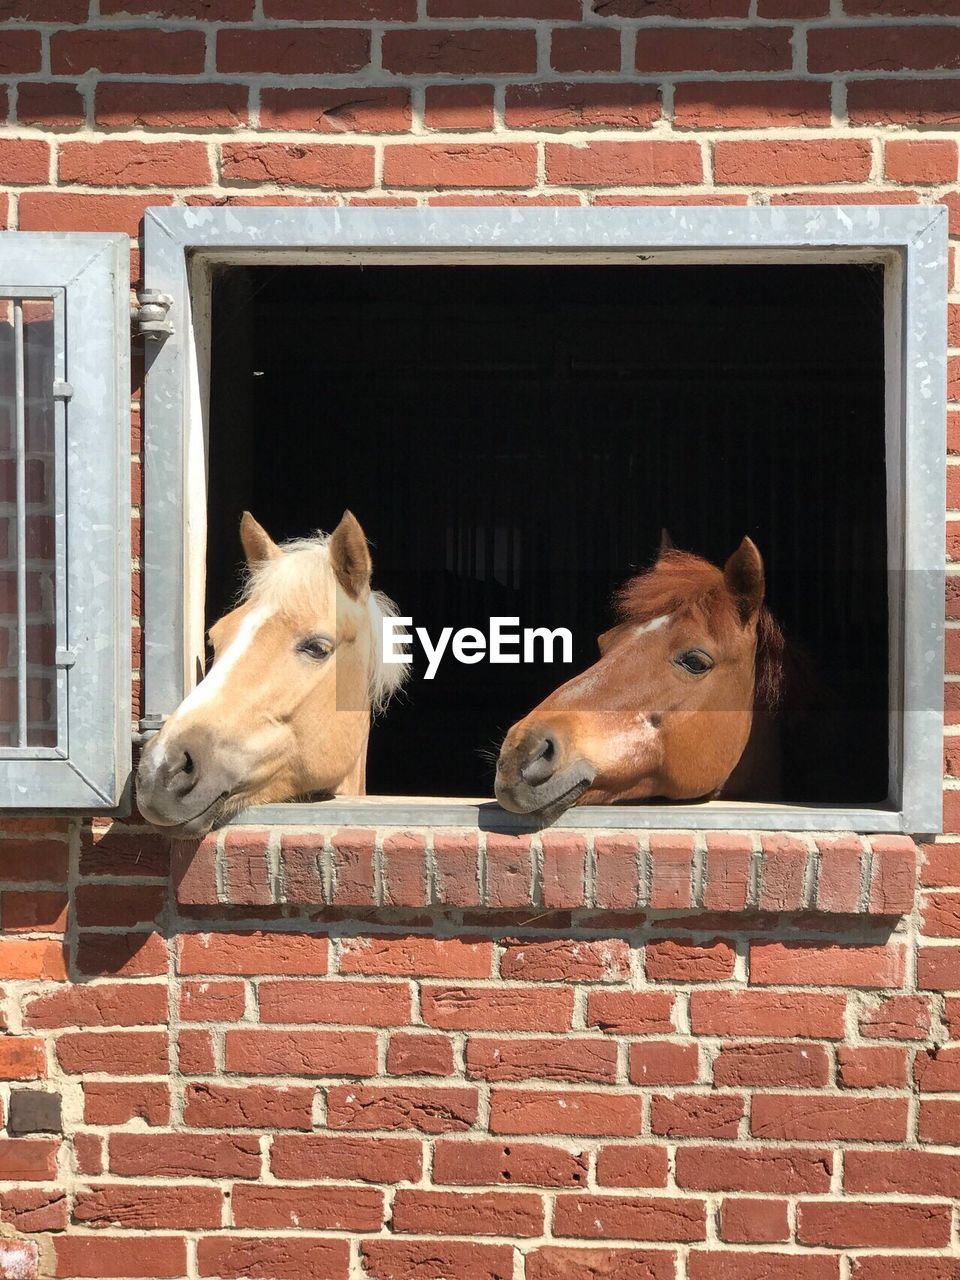 Horses peeking through window